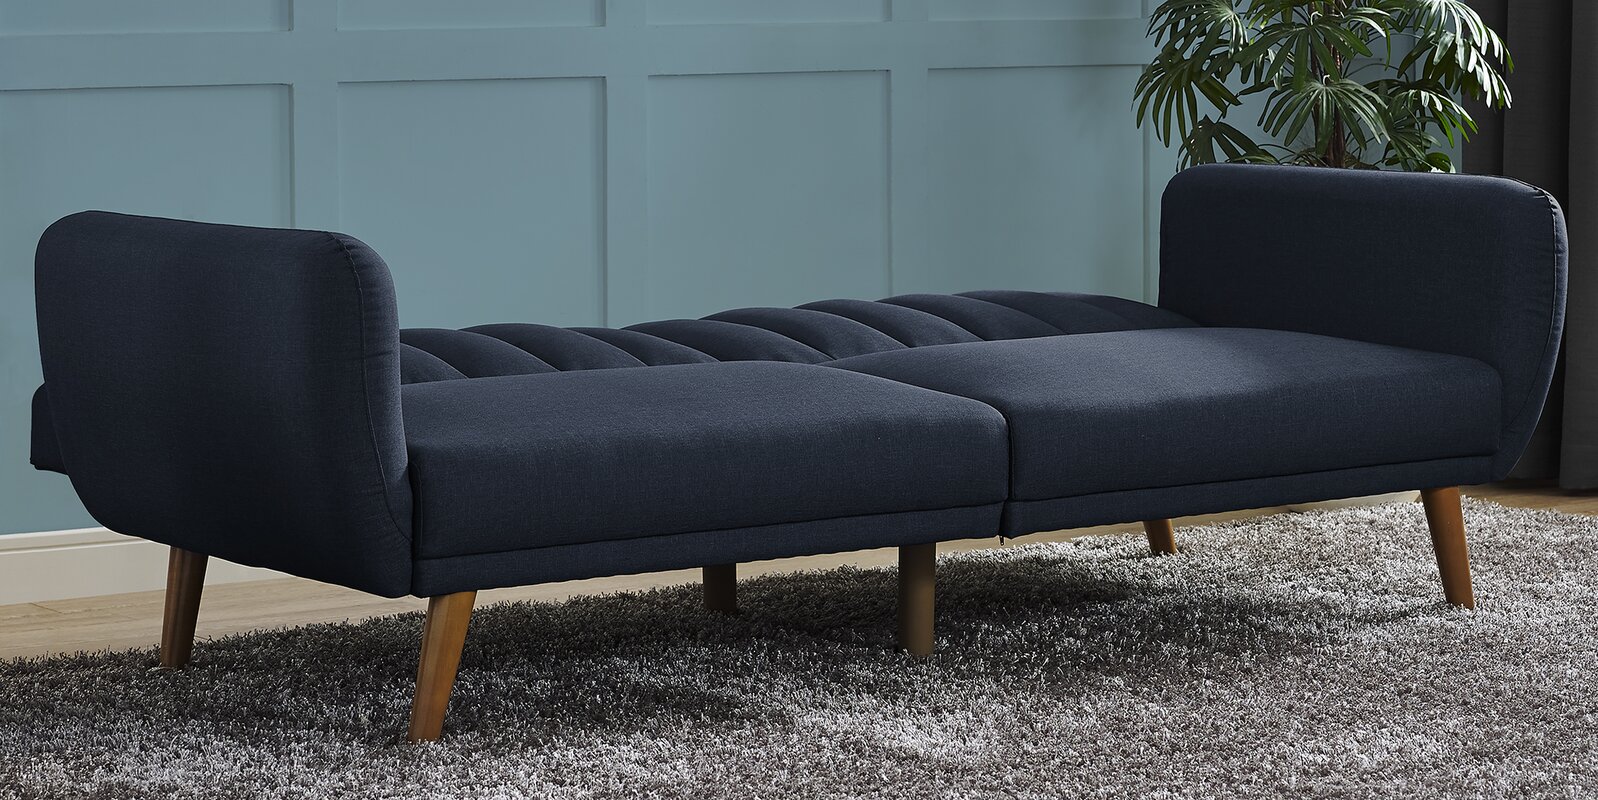 dark gray novogratz brittany sofa bed